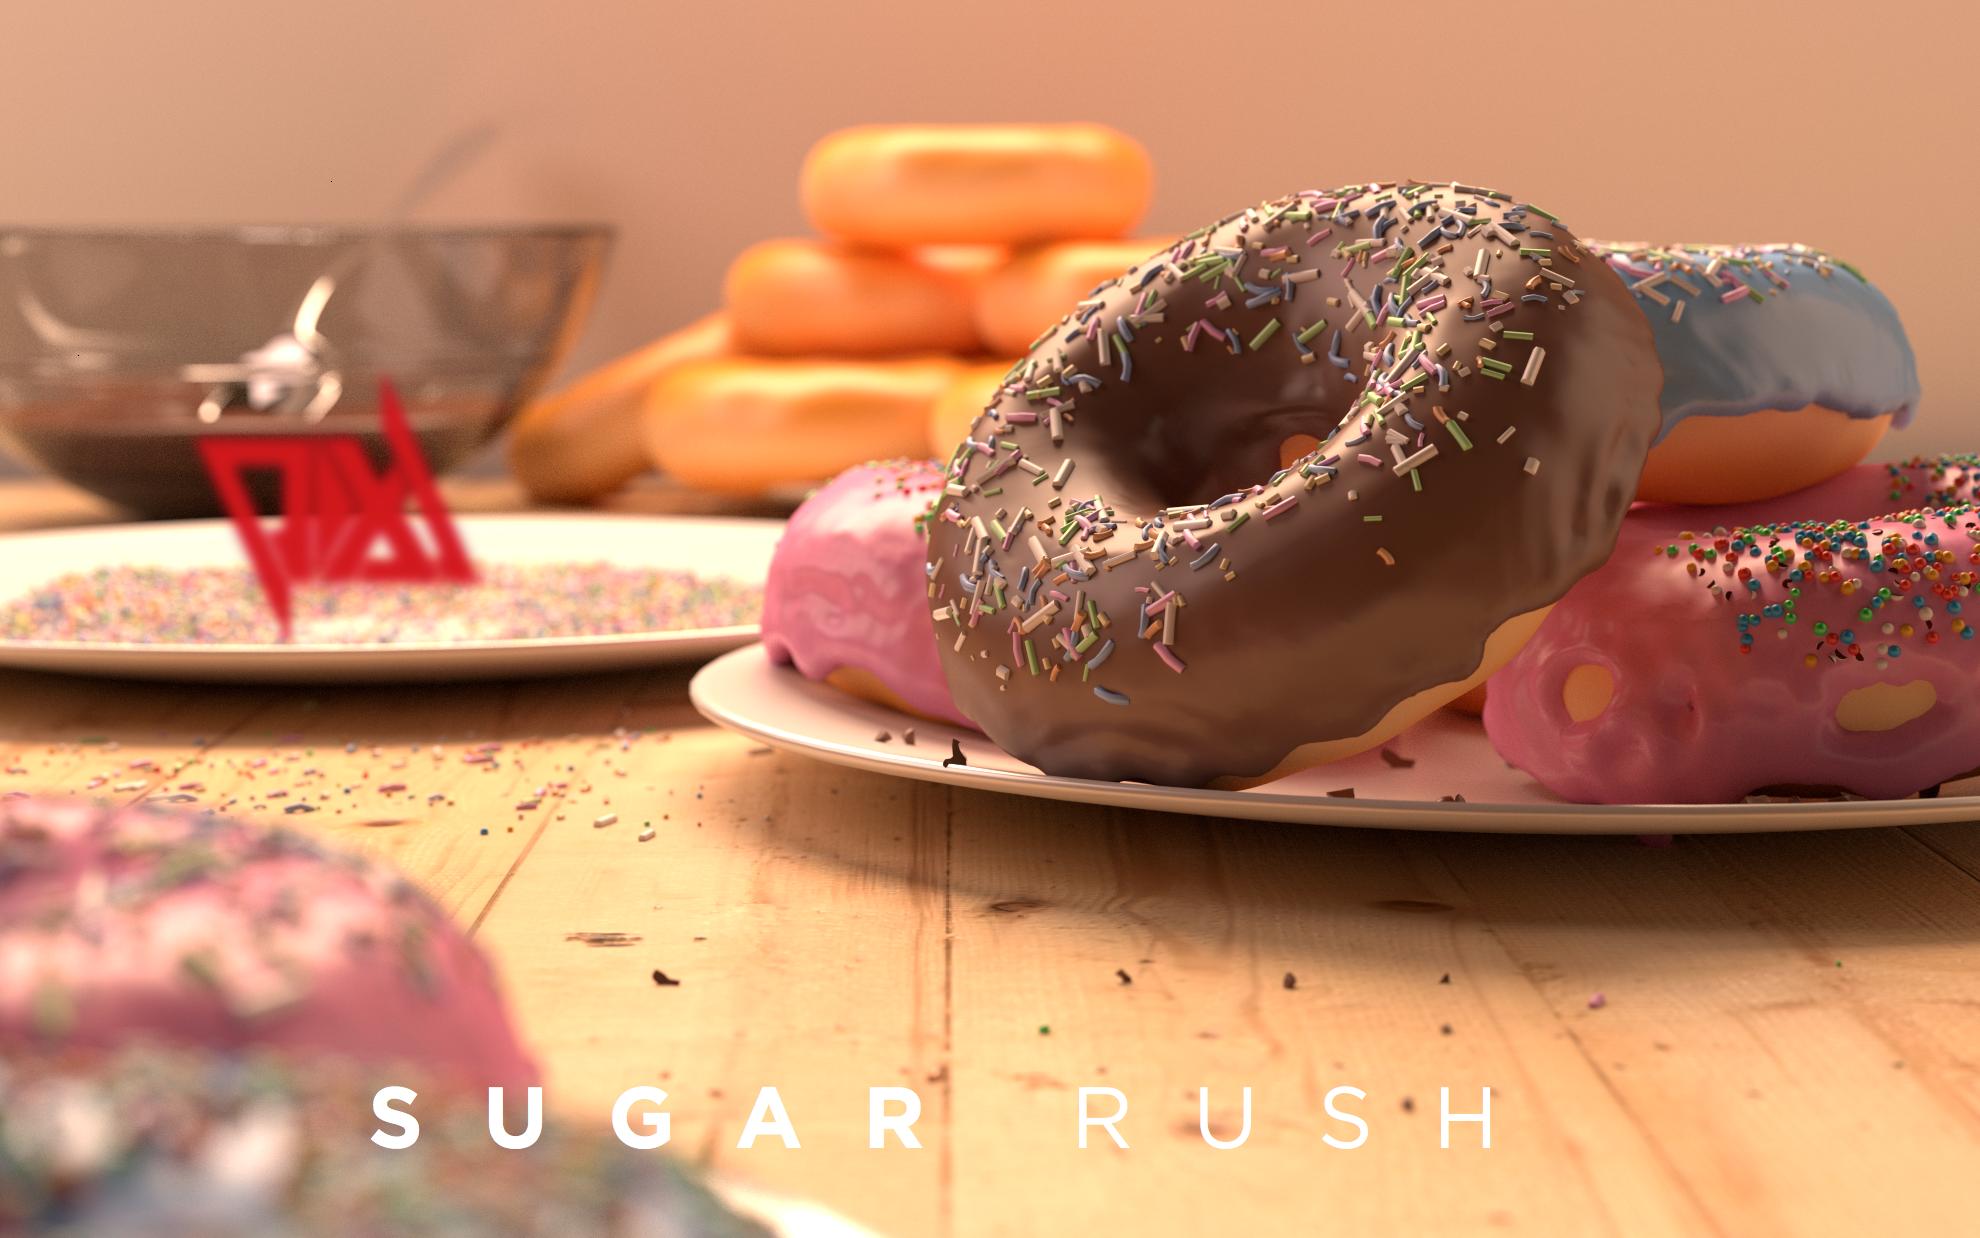 Hey guys I made a wallpaper for Sugar Rush!